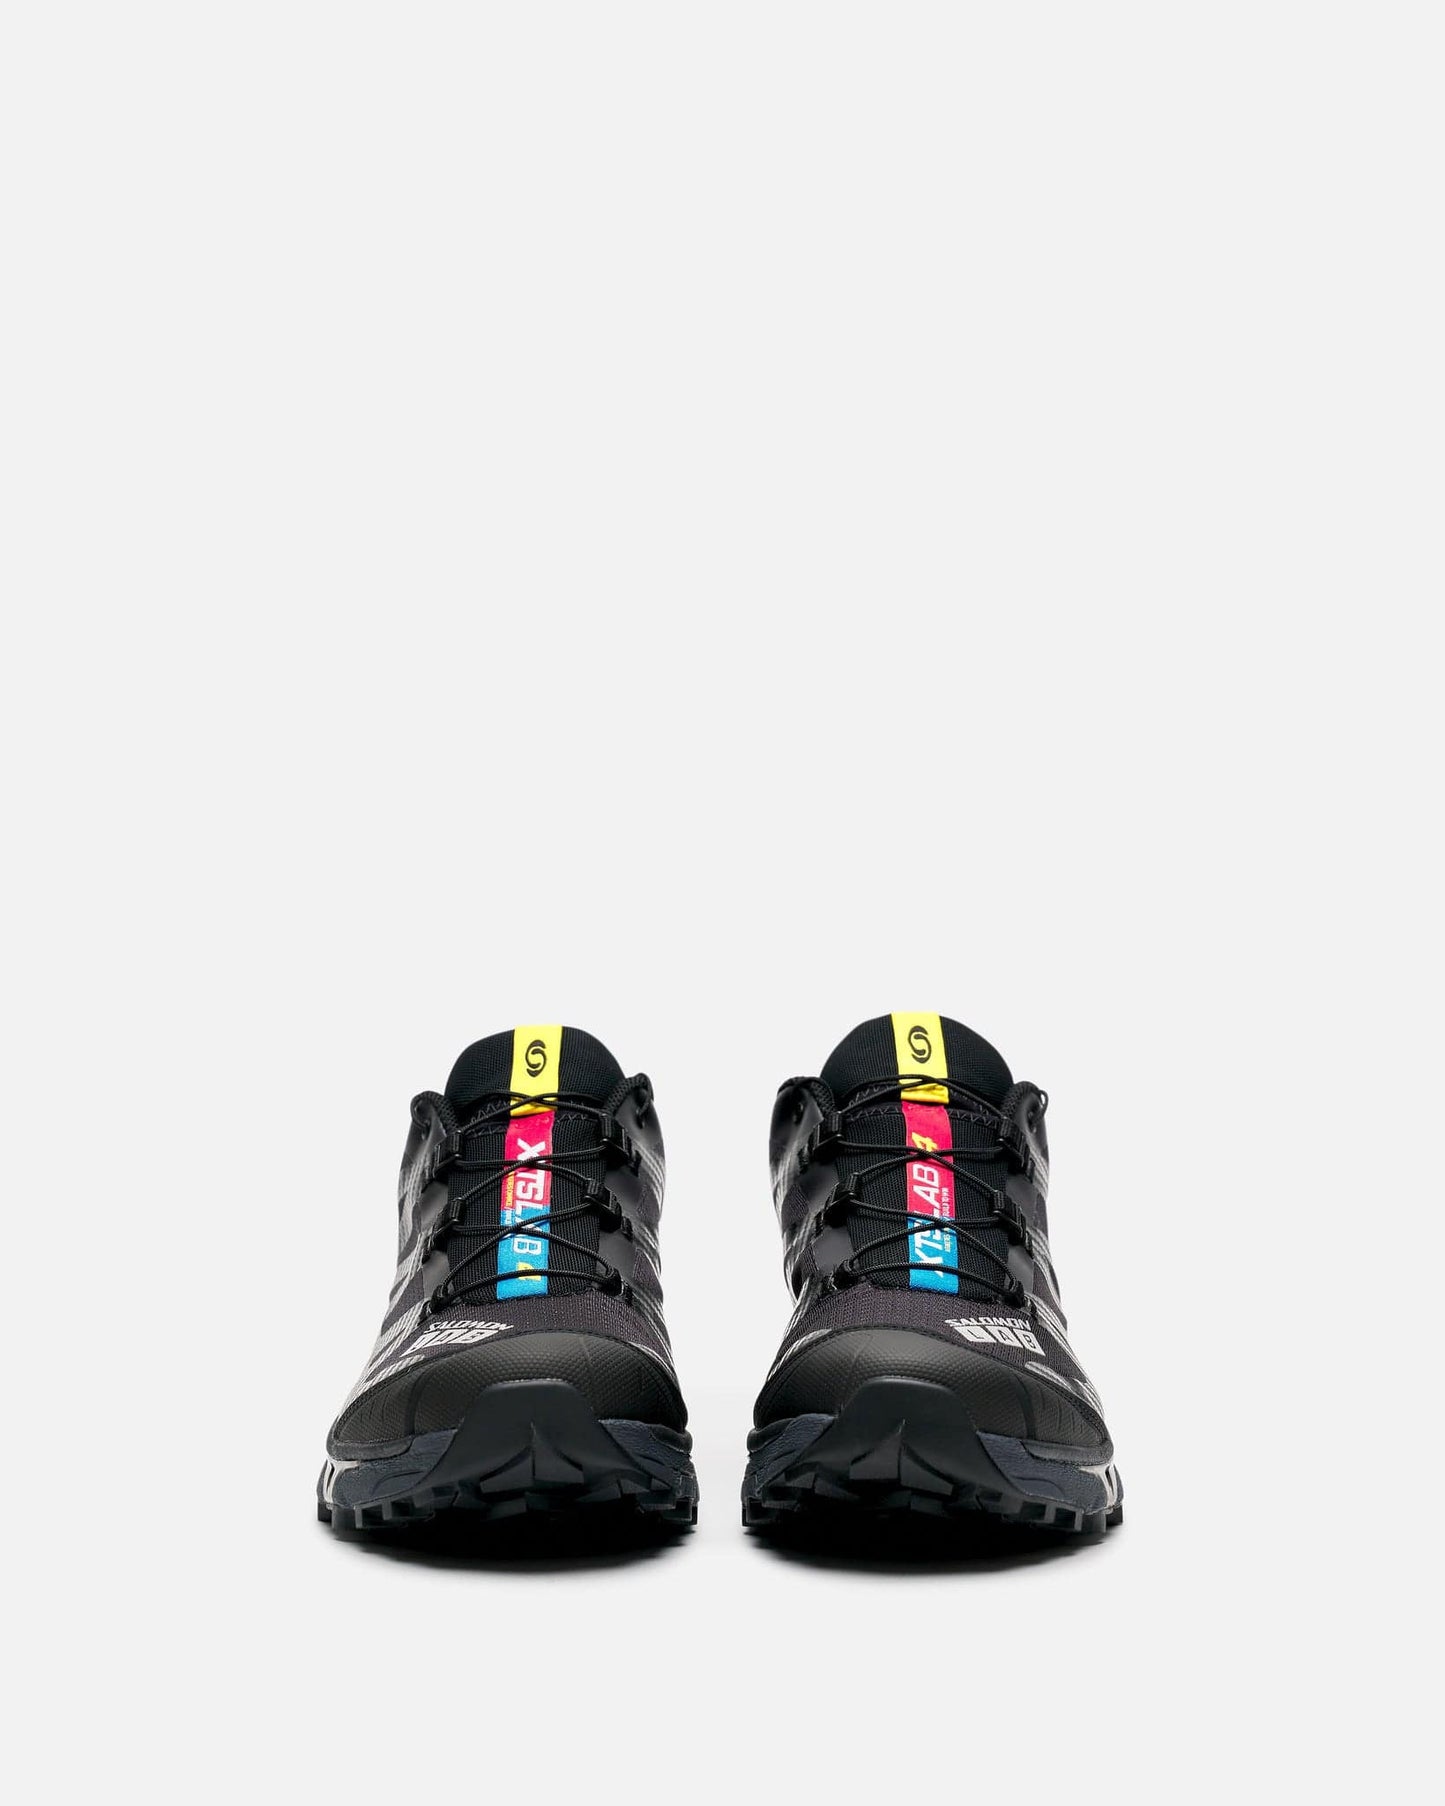 Salomon Men's Sneakers XT-4 OG in Black/Ebony